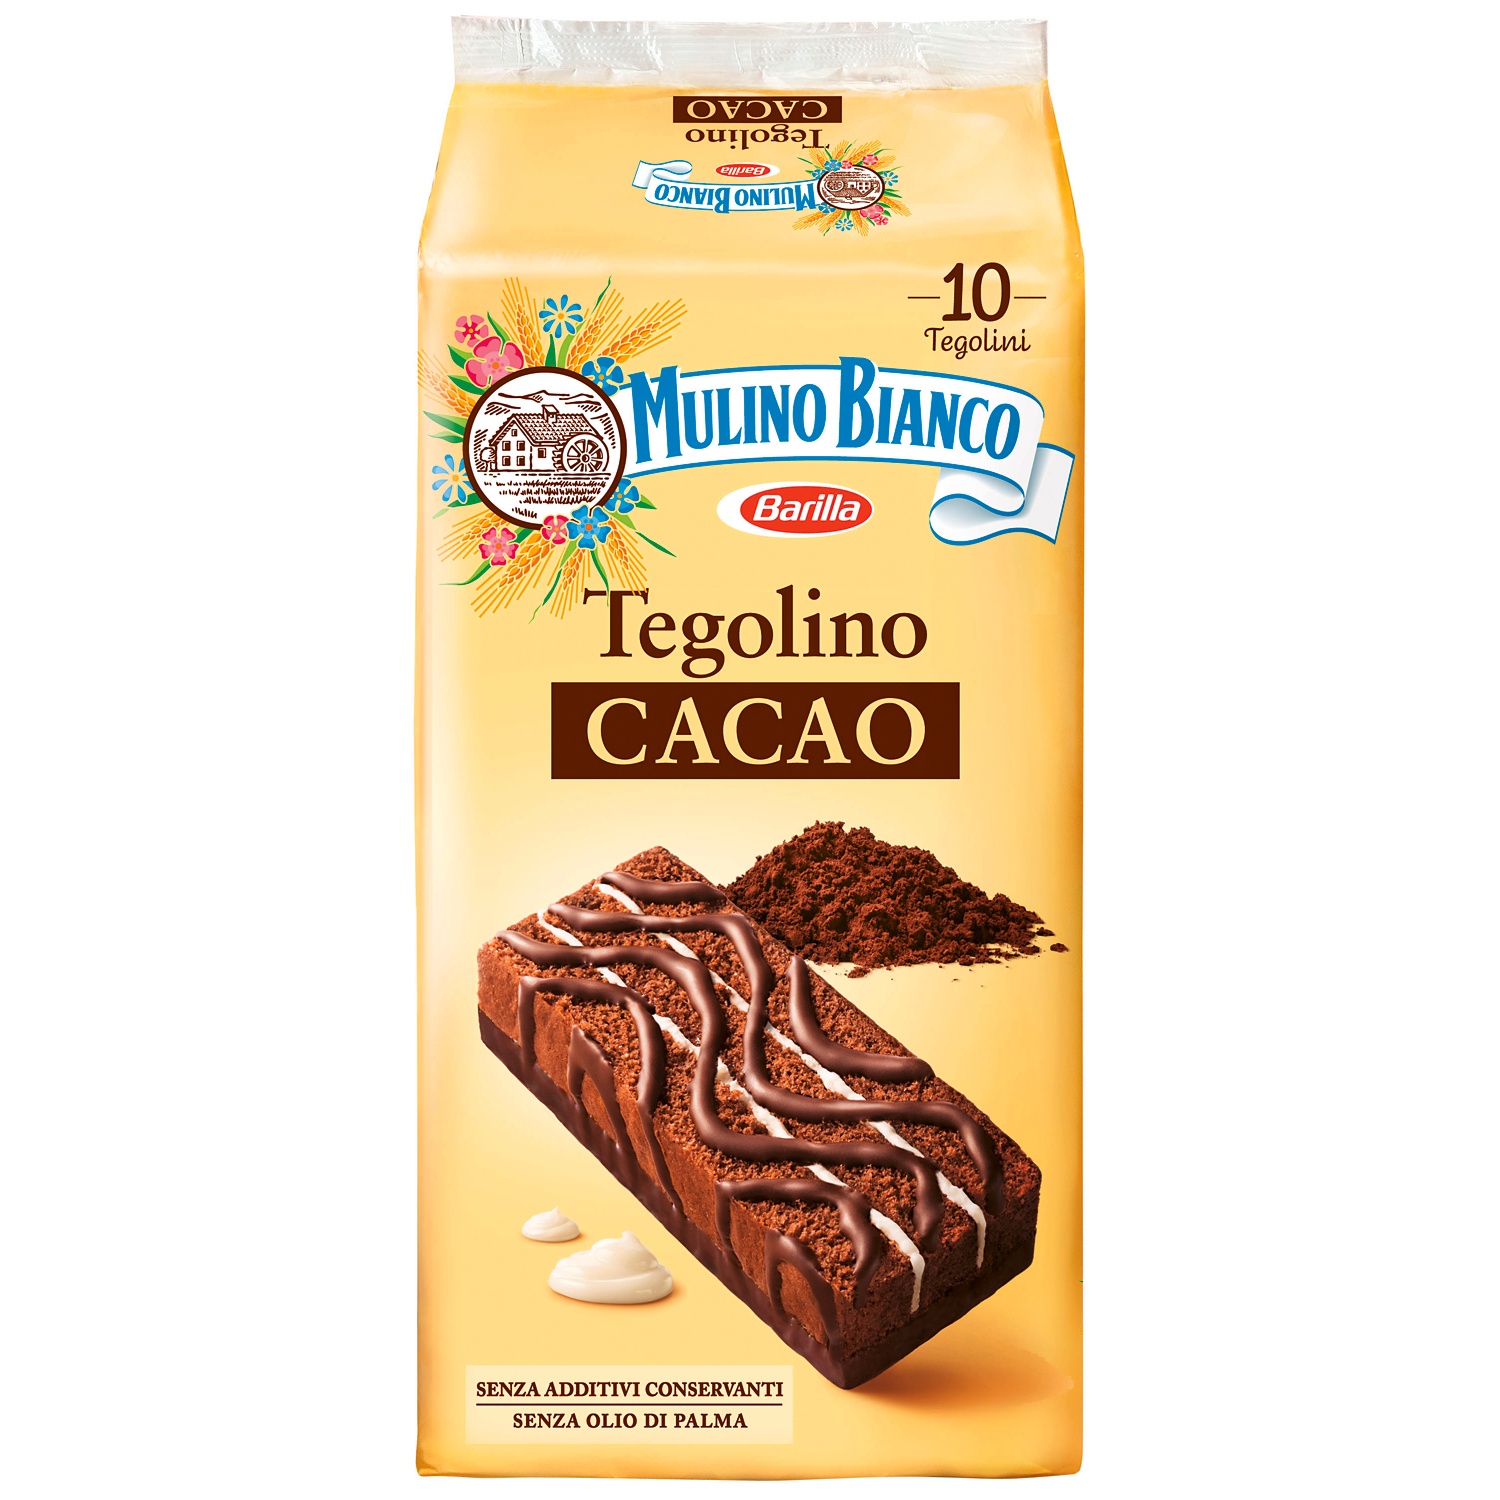 MULINO BIANCO Tegolino Cacao